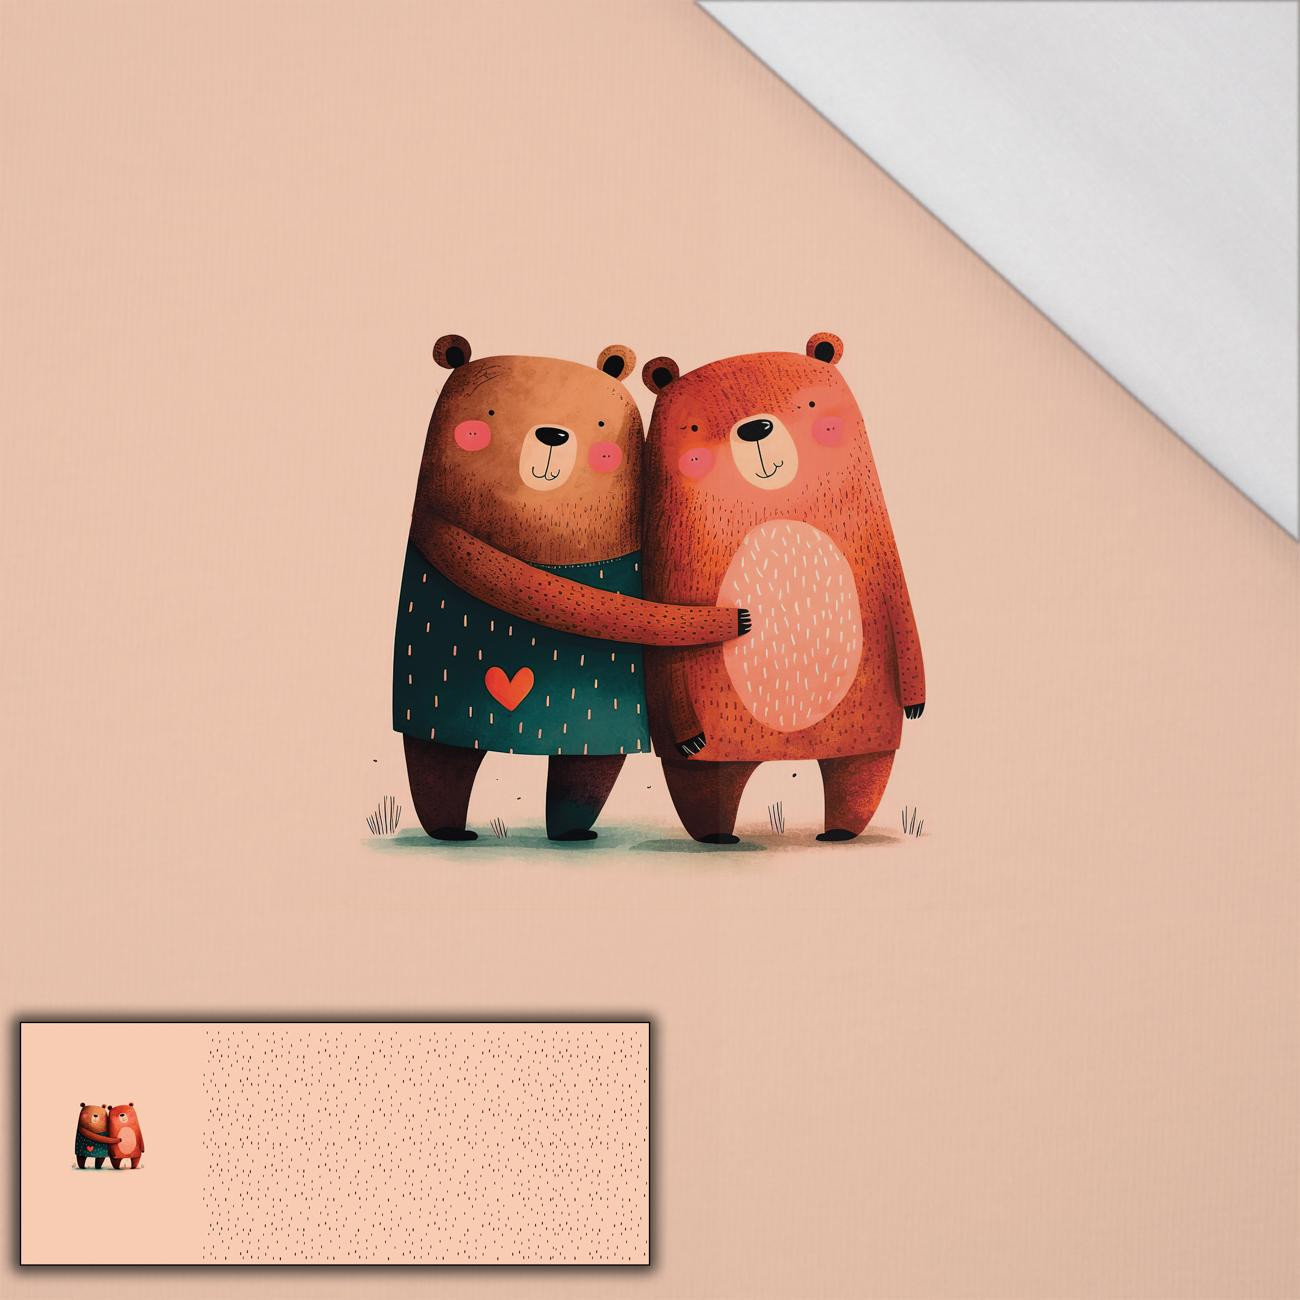 BEARS IN LOVE 1 - PANEL PANORAMICZNY SINGLE JERSEY (60cm x 155cm)